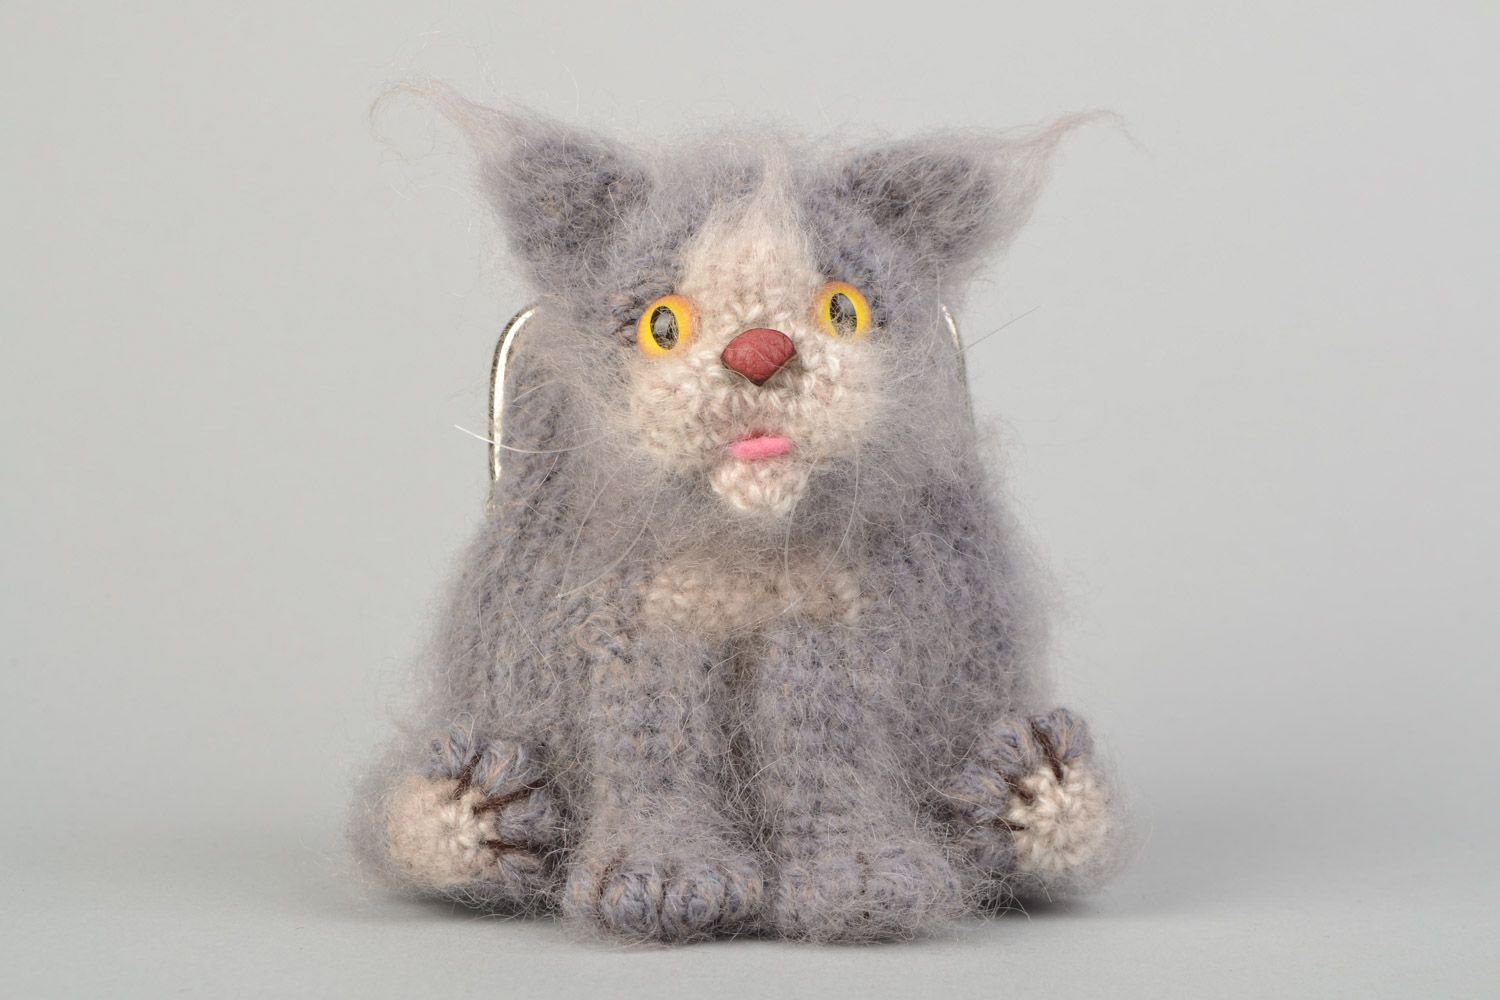 Handmade crocheted wallet purse made of angora threads gray cat for children photo 1